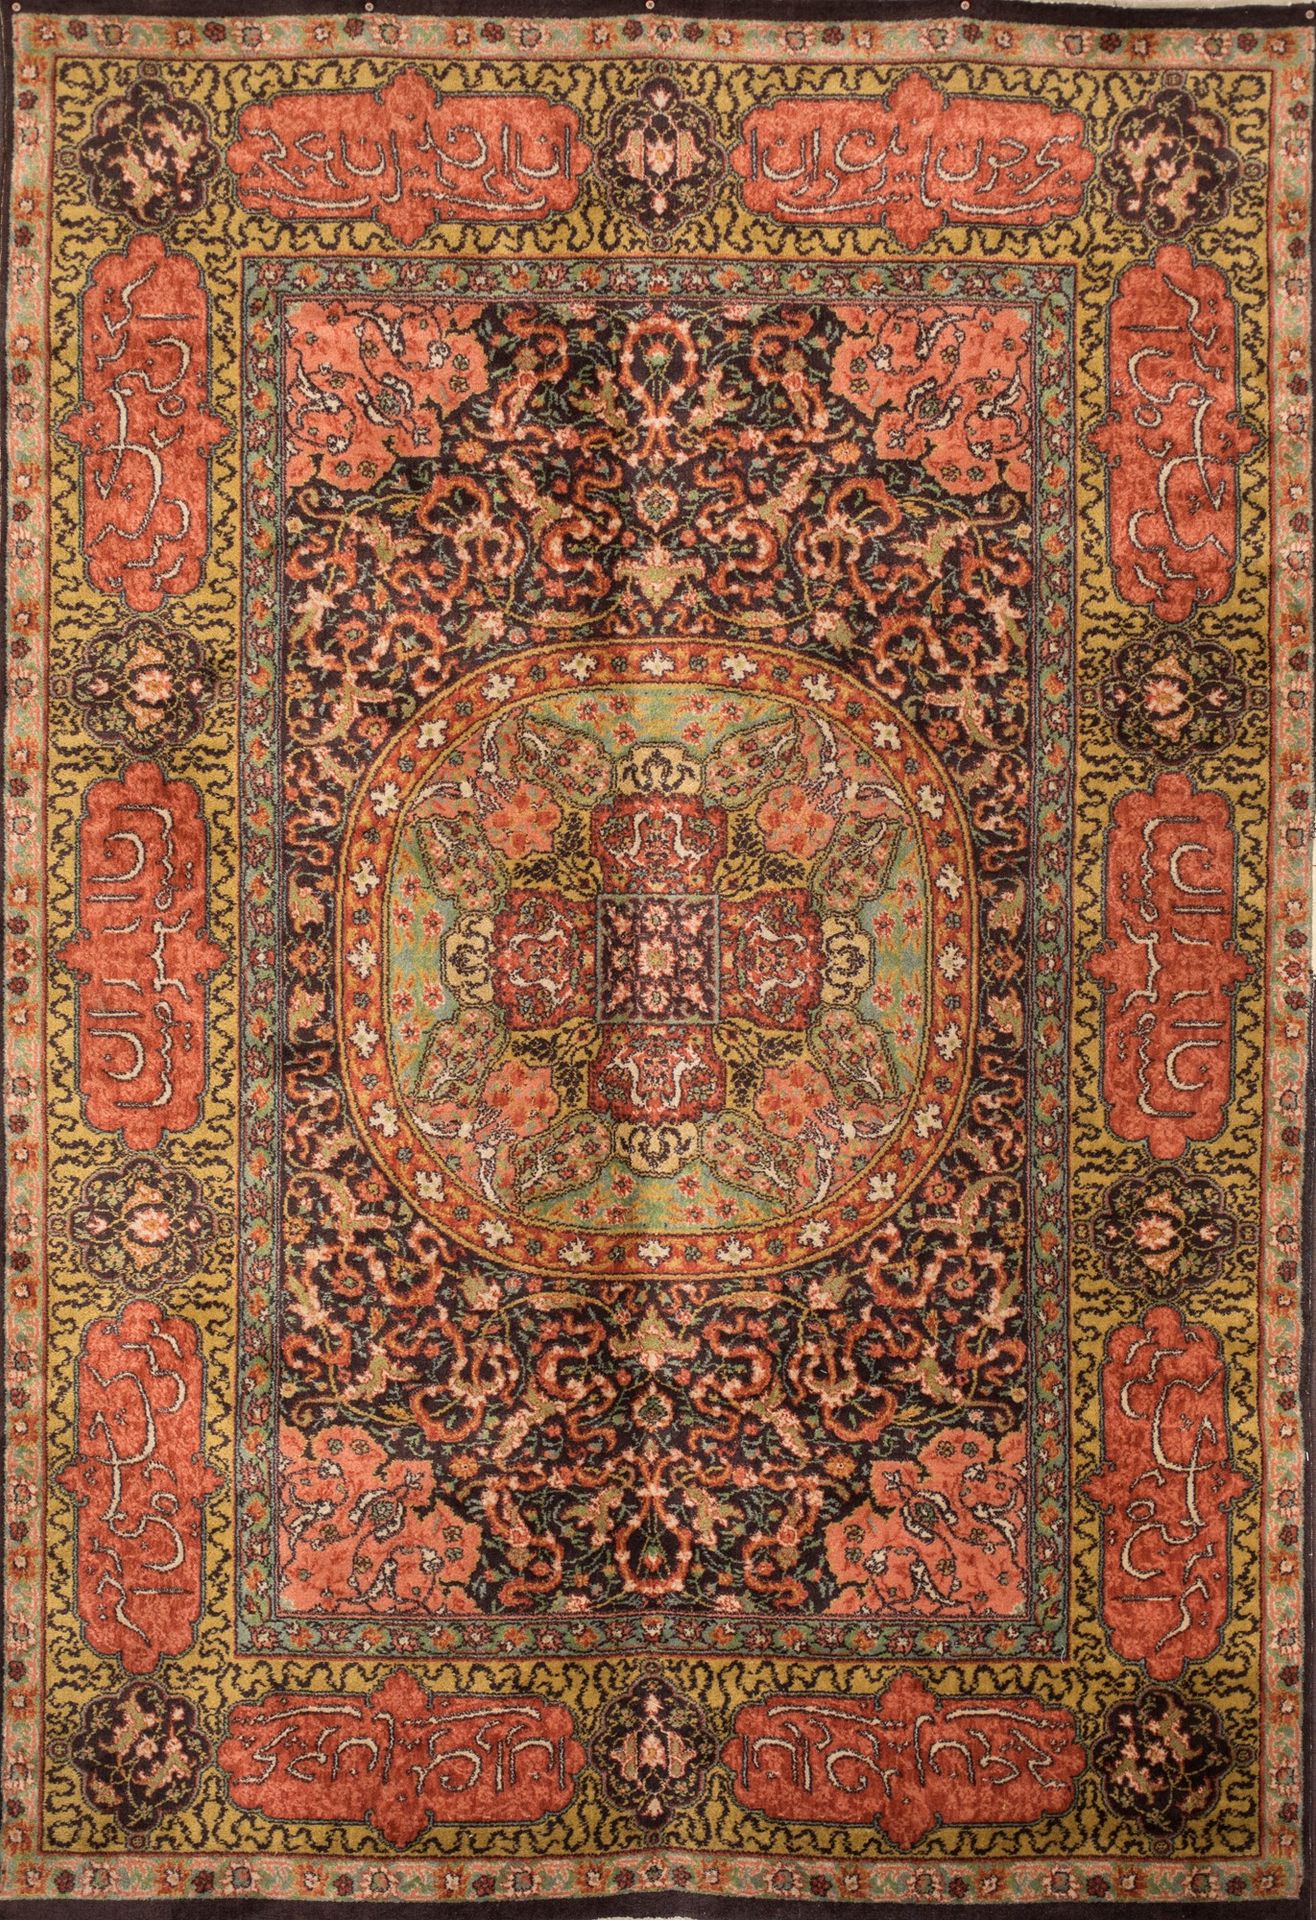 Persian Khorassan carpet 有密集的自然主义图案的装饰和沿主框架排列的卷轴铭文